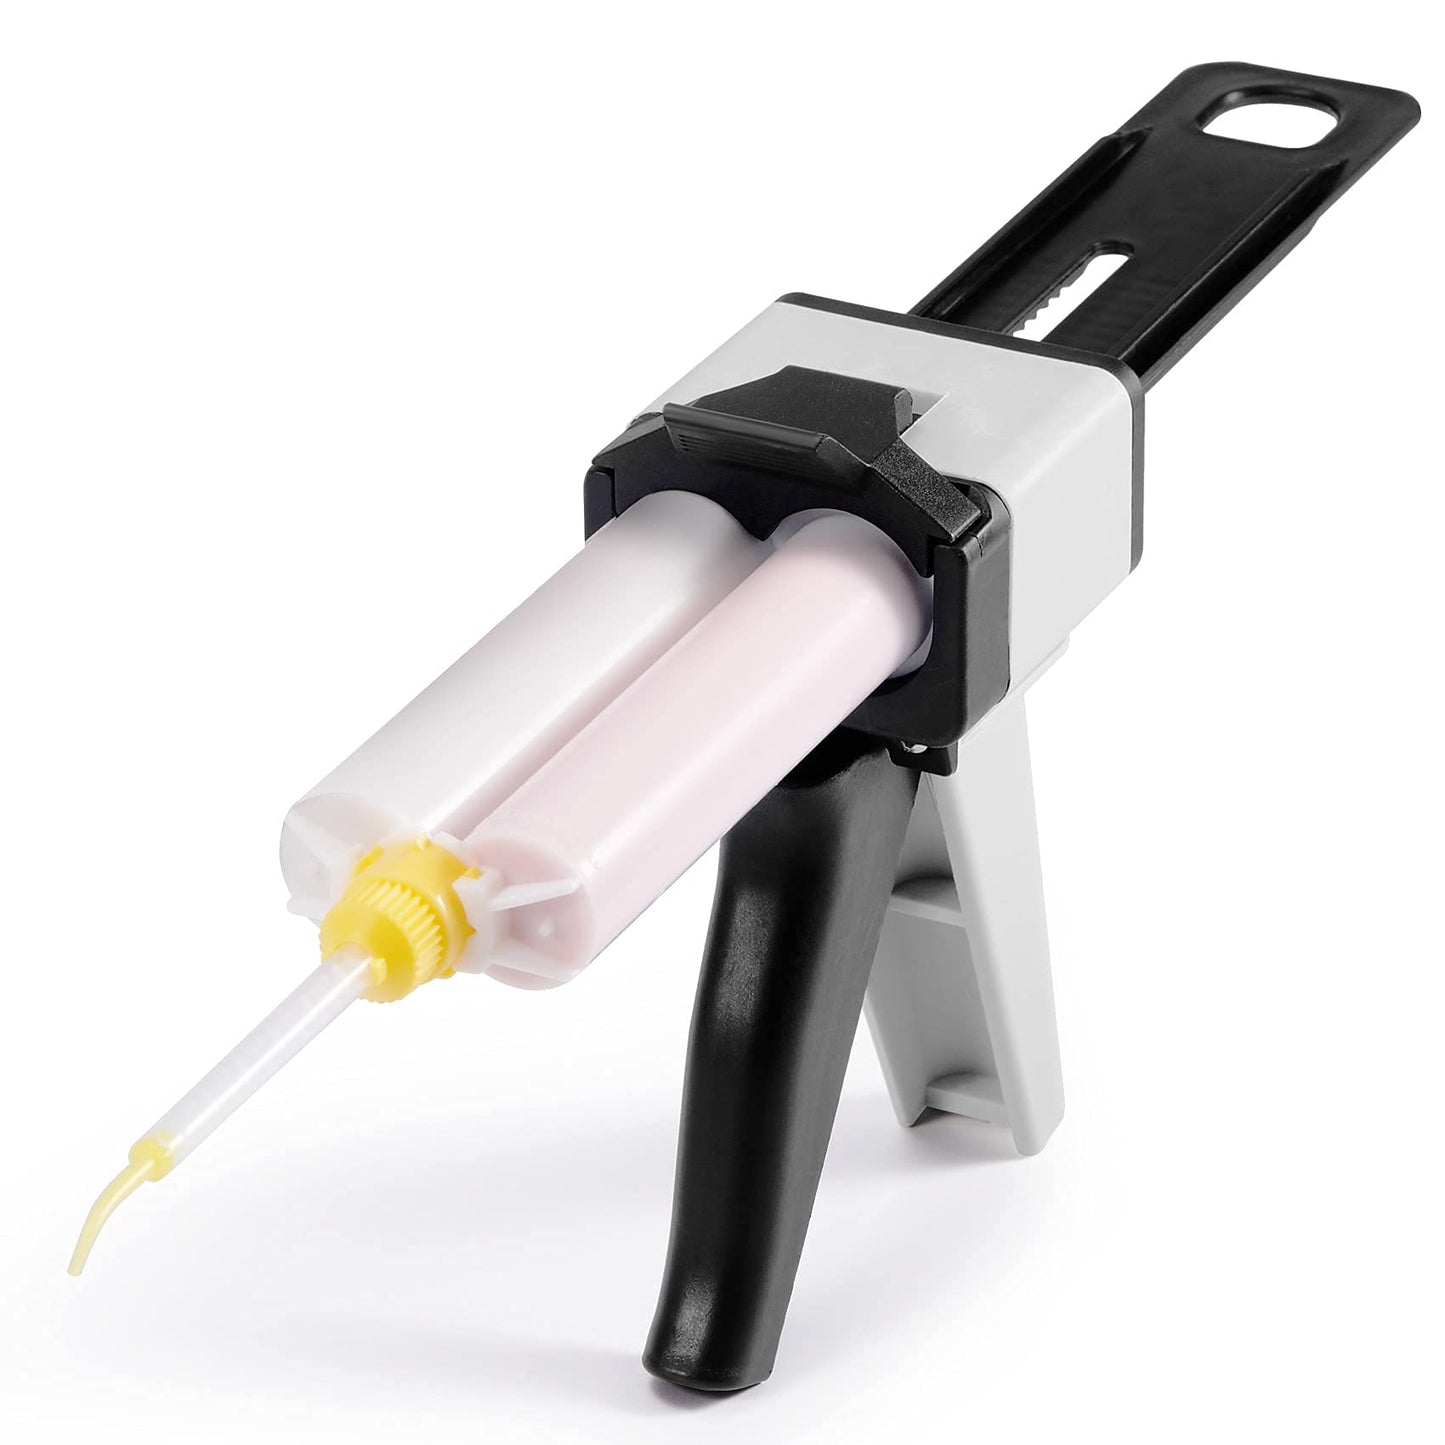 Dispenser Gun Kit 50ml Dental Impression Material Dispensing Guns, Solid Epoxy Gun 1:1/1:2 for Dispense Dental Resin Materials, Adhesive and Glue